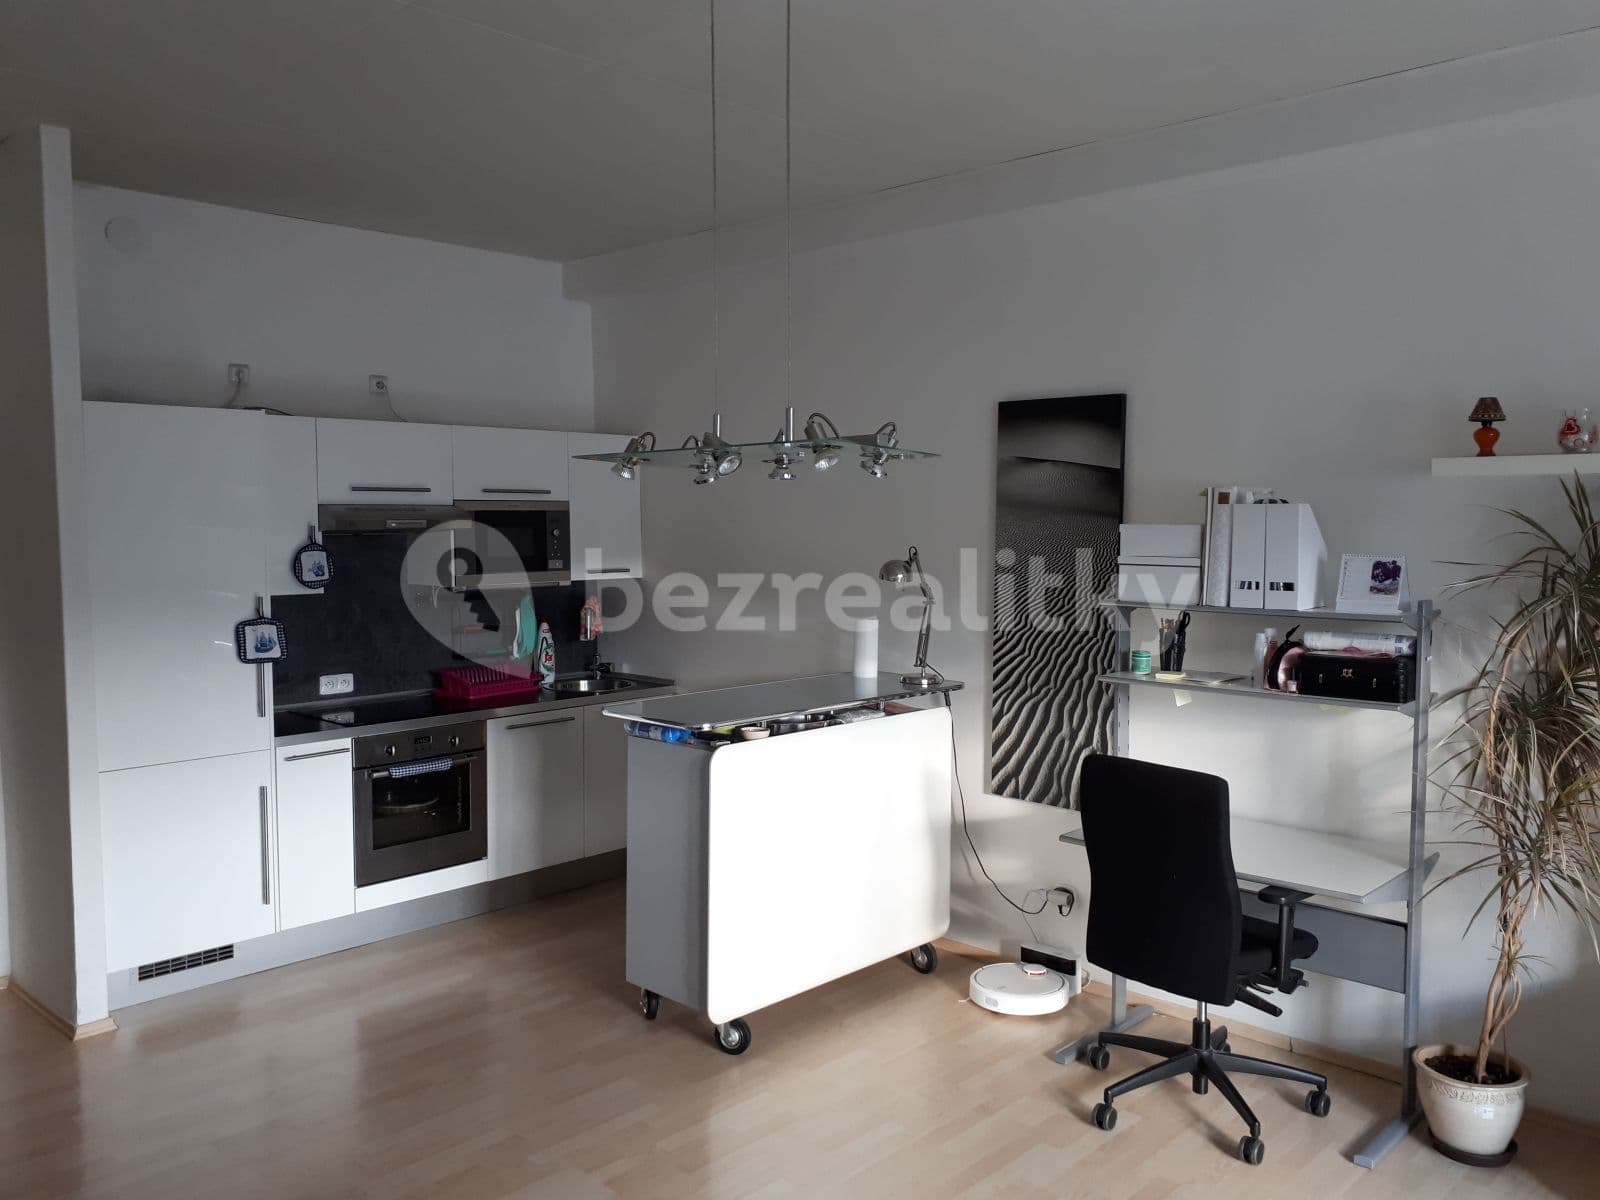 1 bedroom with open-plan kitchen flat to rent, 60 m², Českomoravská, Prague, Prague